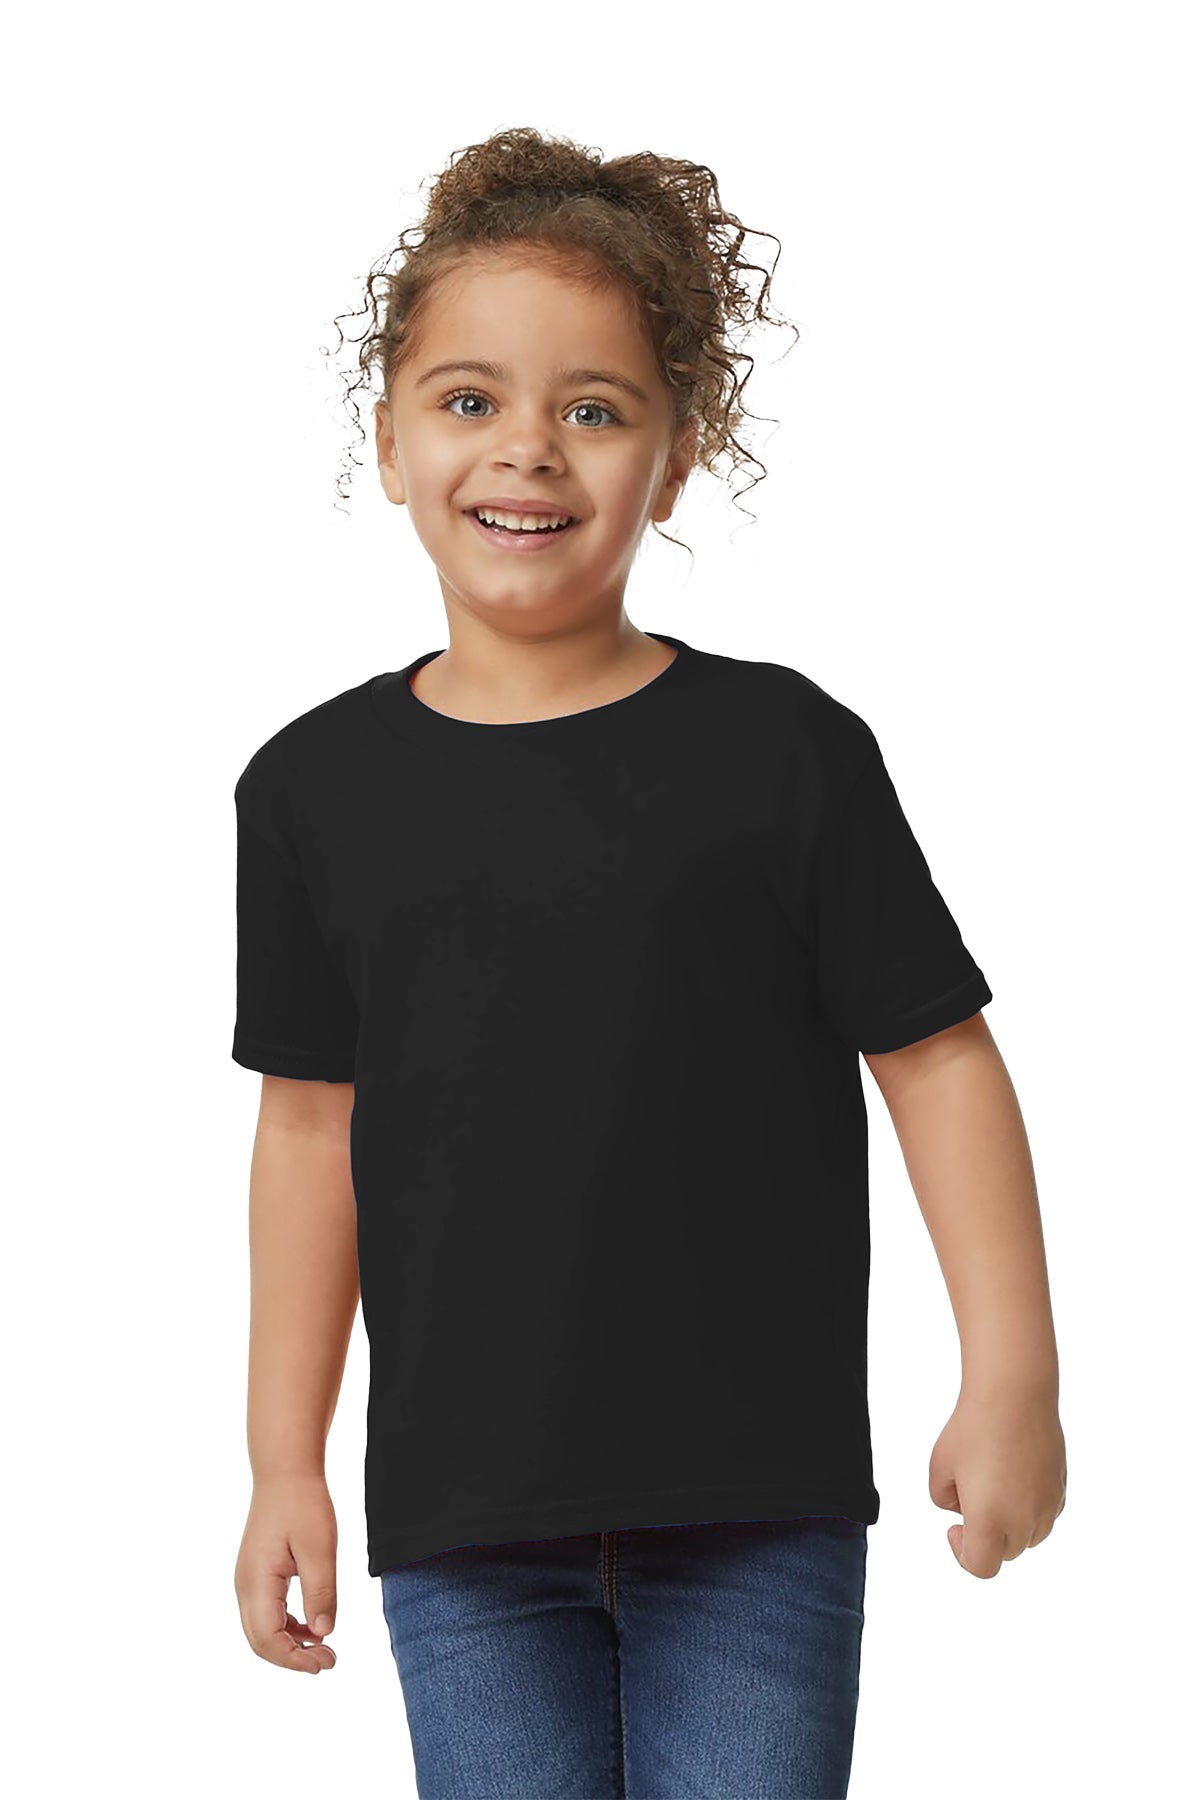 Gilden 5100P Toddler T-Shirt 3T / Black